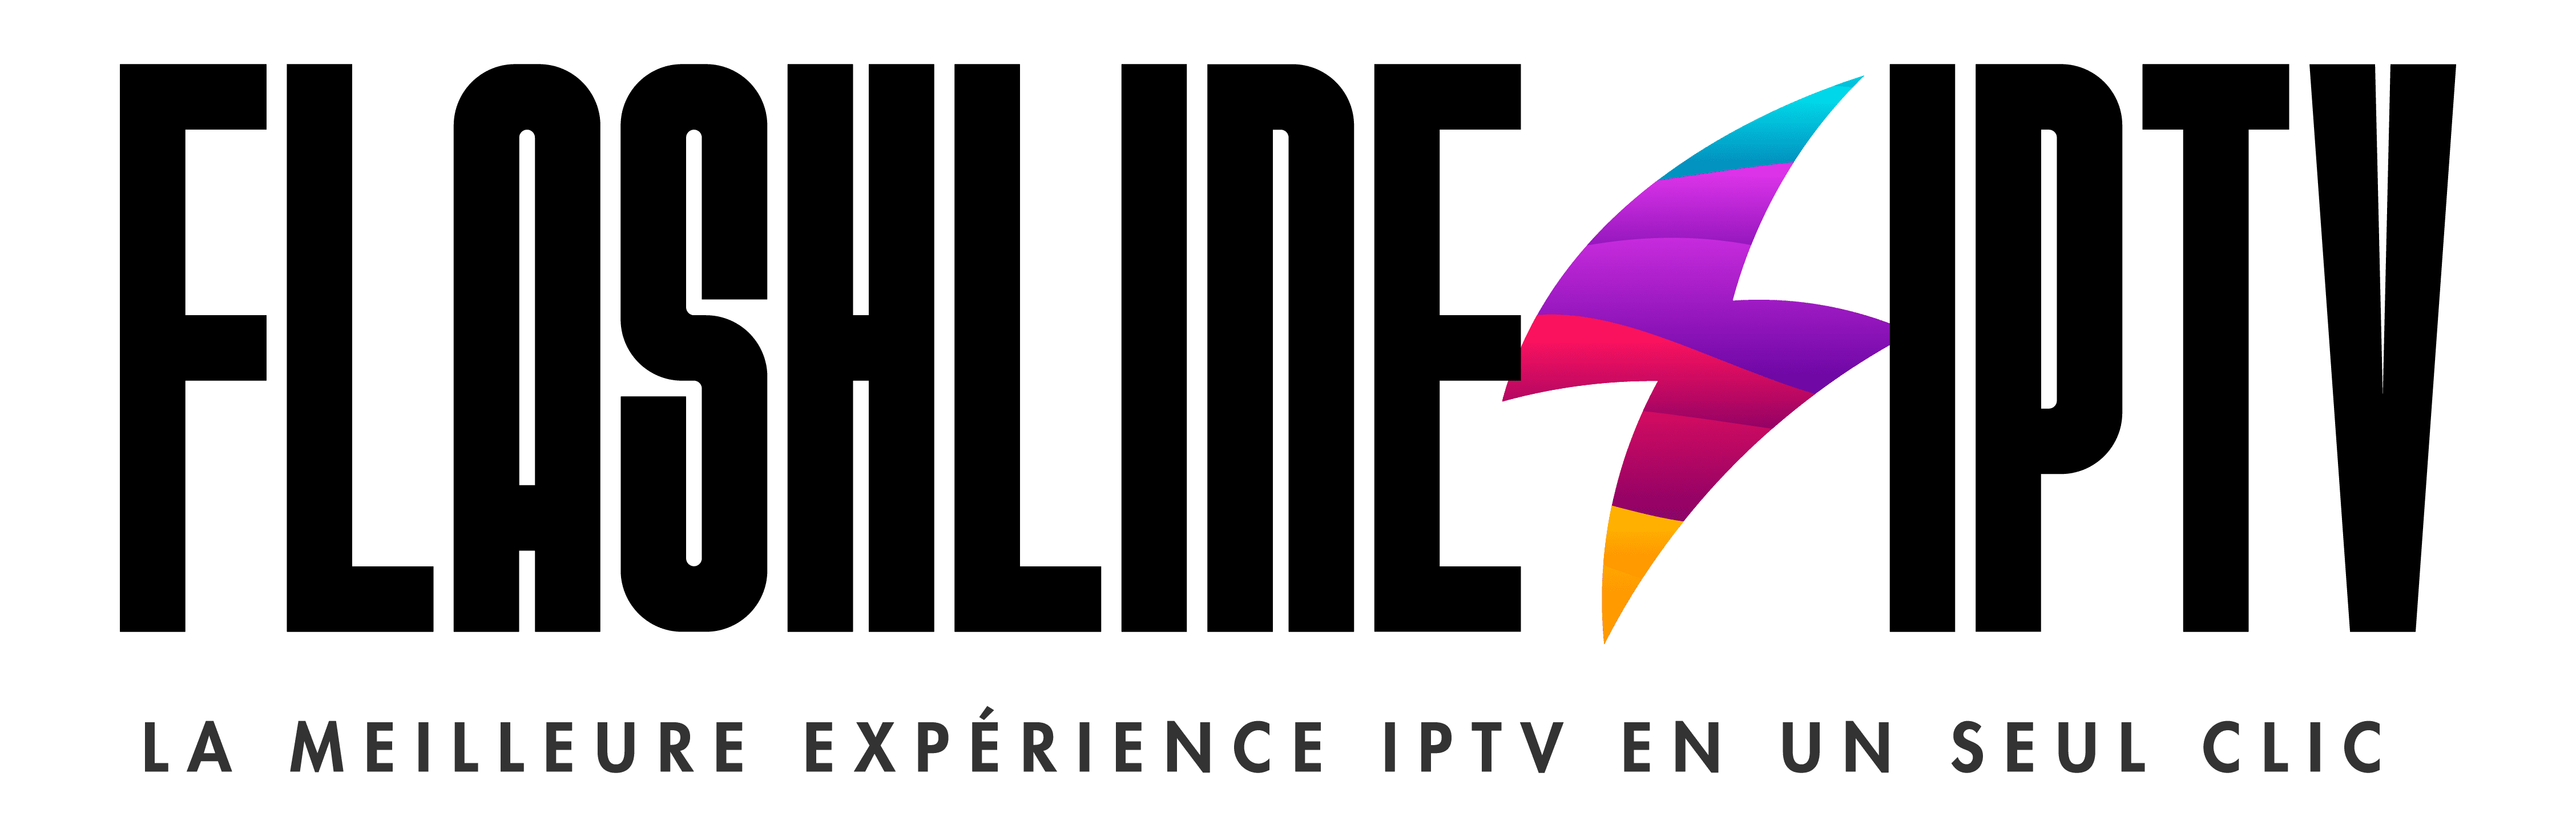 Abonnement IPTV - FlashLine IPTV le meilleur fournisseur iptv